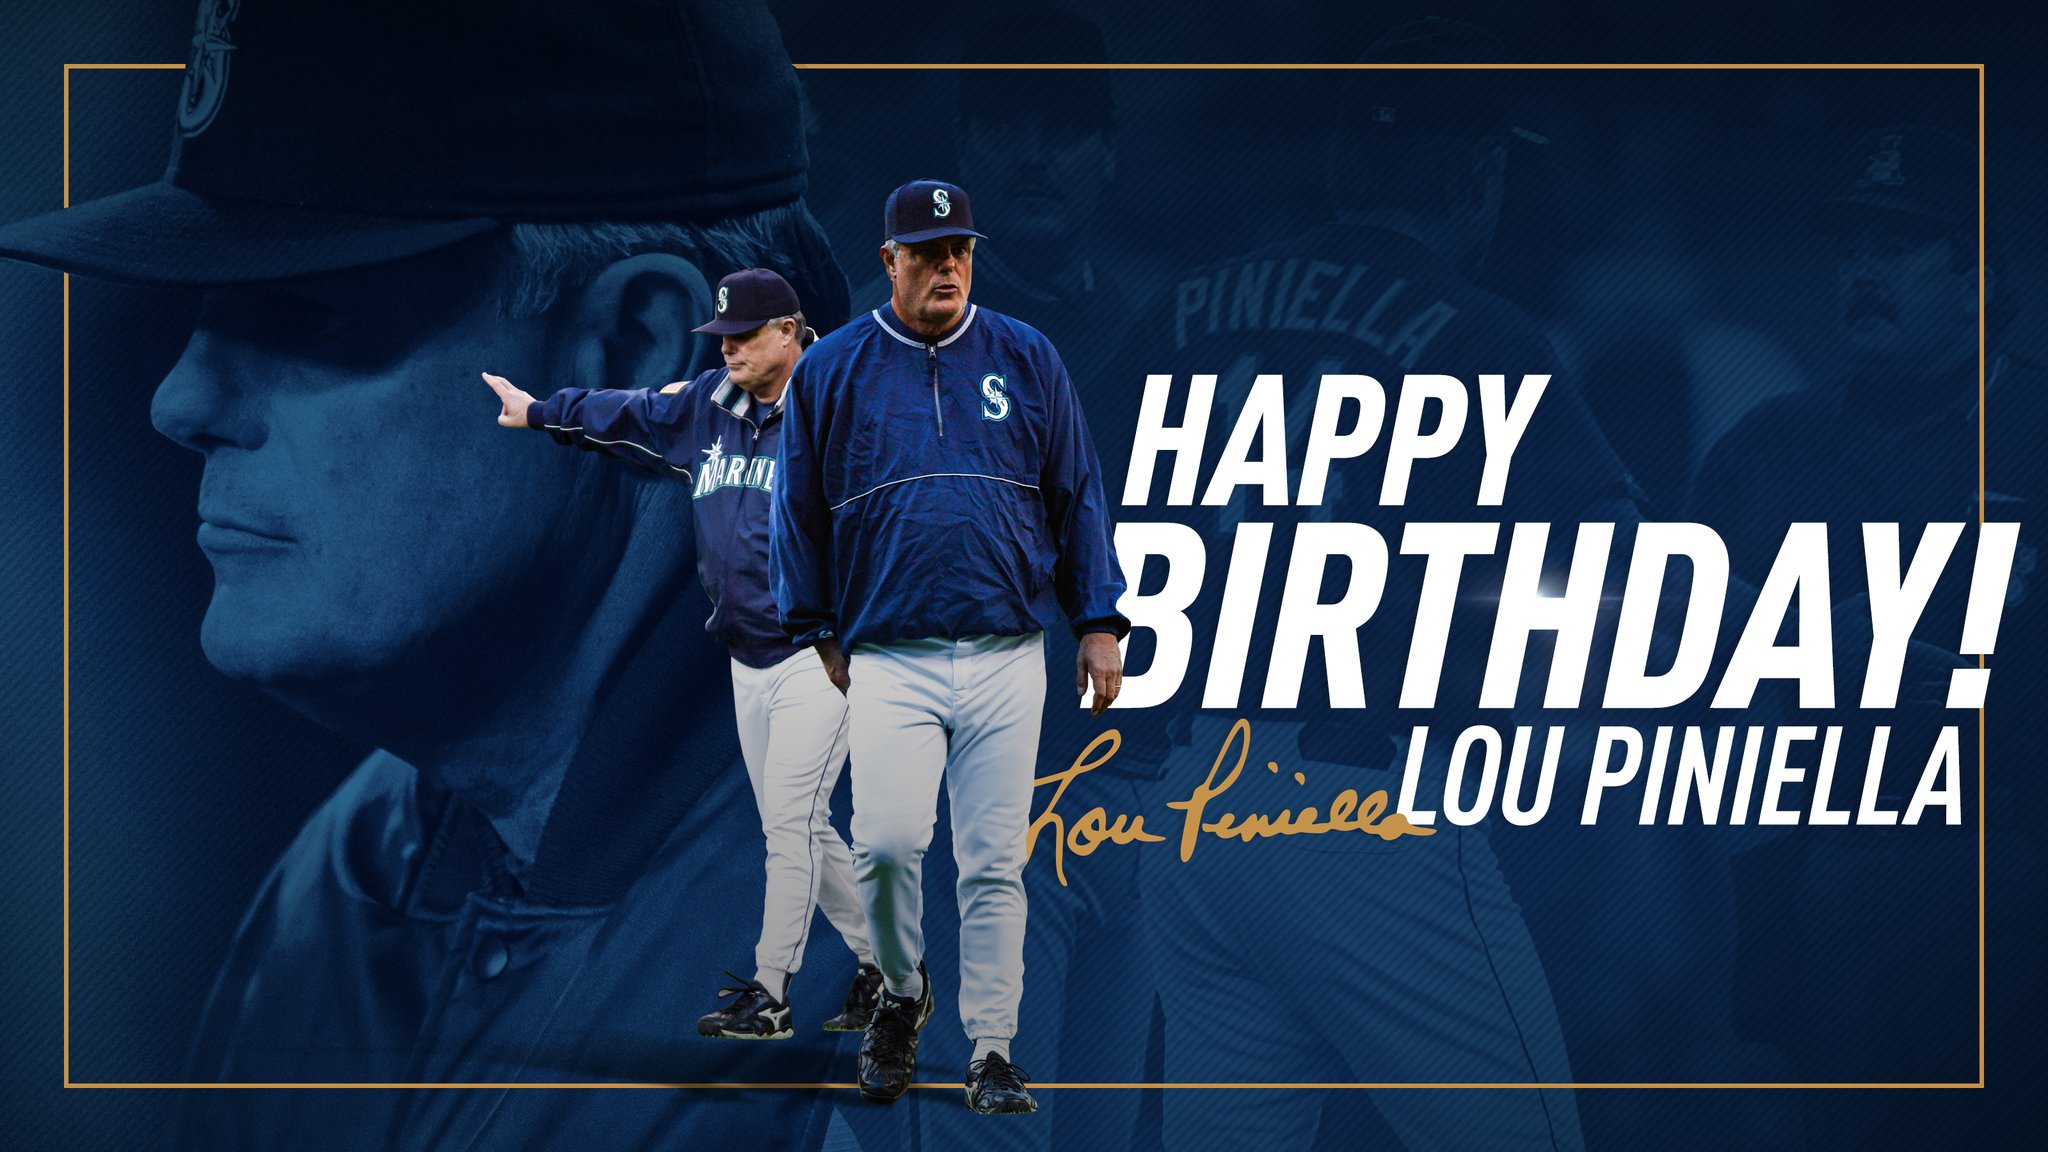 LOOOOUUUUUUUUUU!  Happy birthday to former skipper and Mariners Hall of Famer, Lou Piniella. 